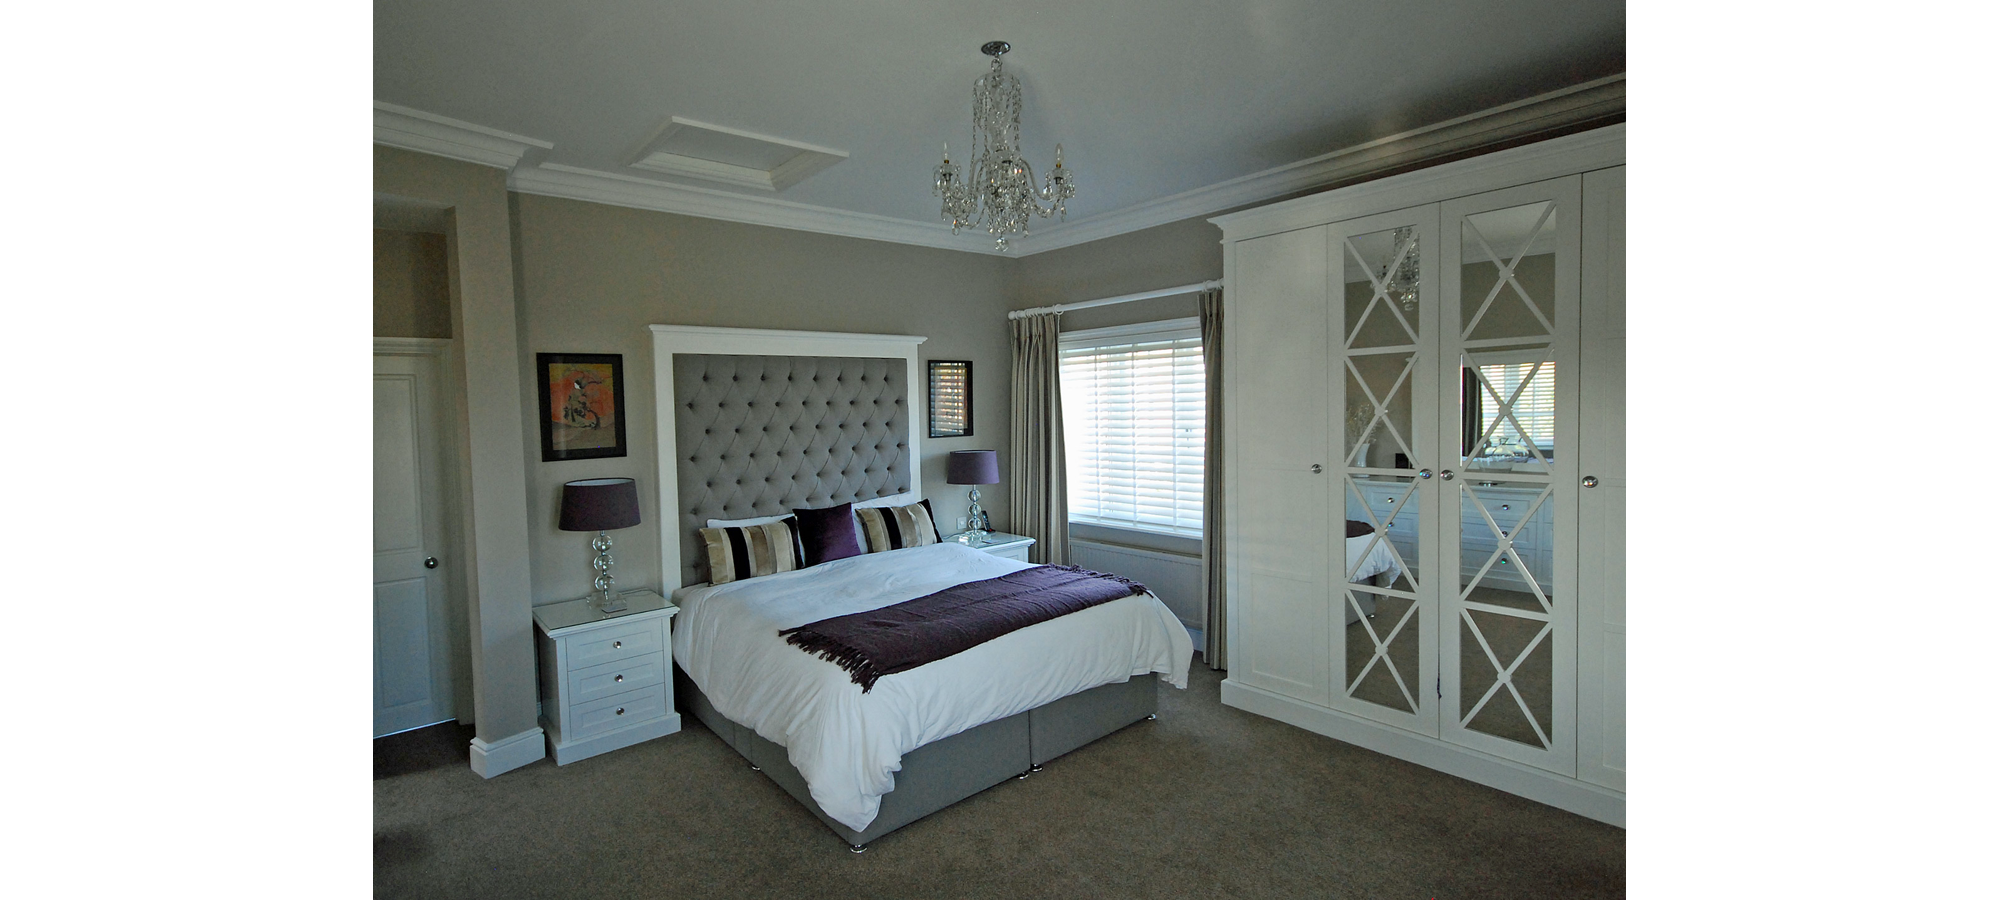 rental places for bedroom furniture